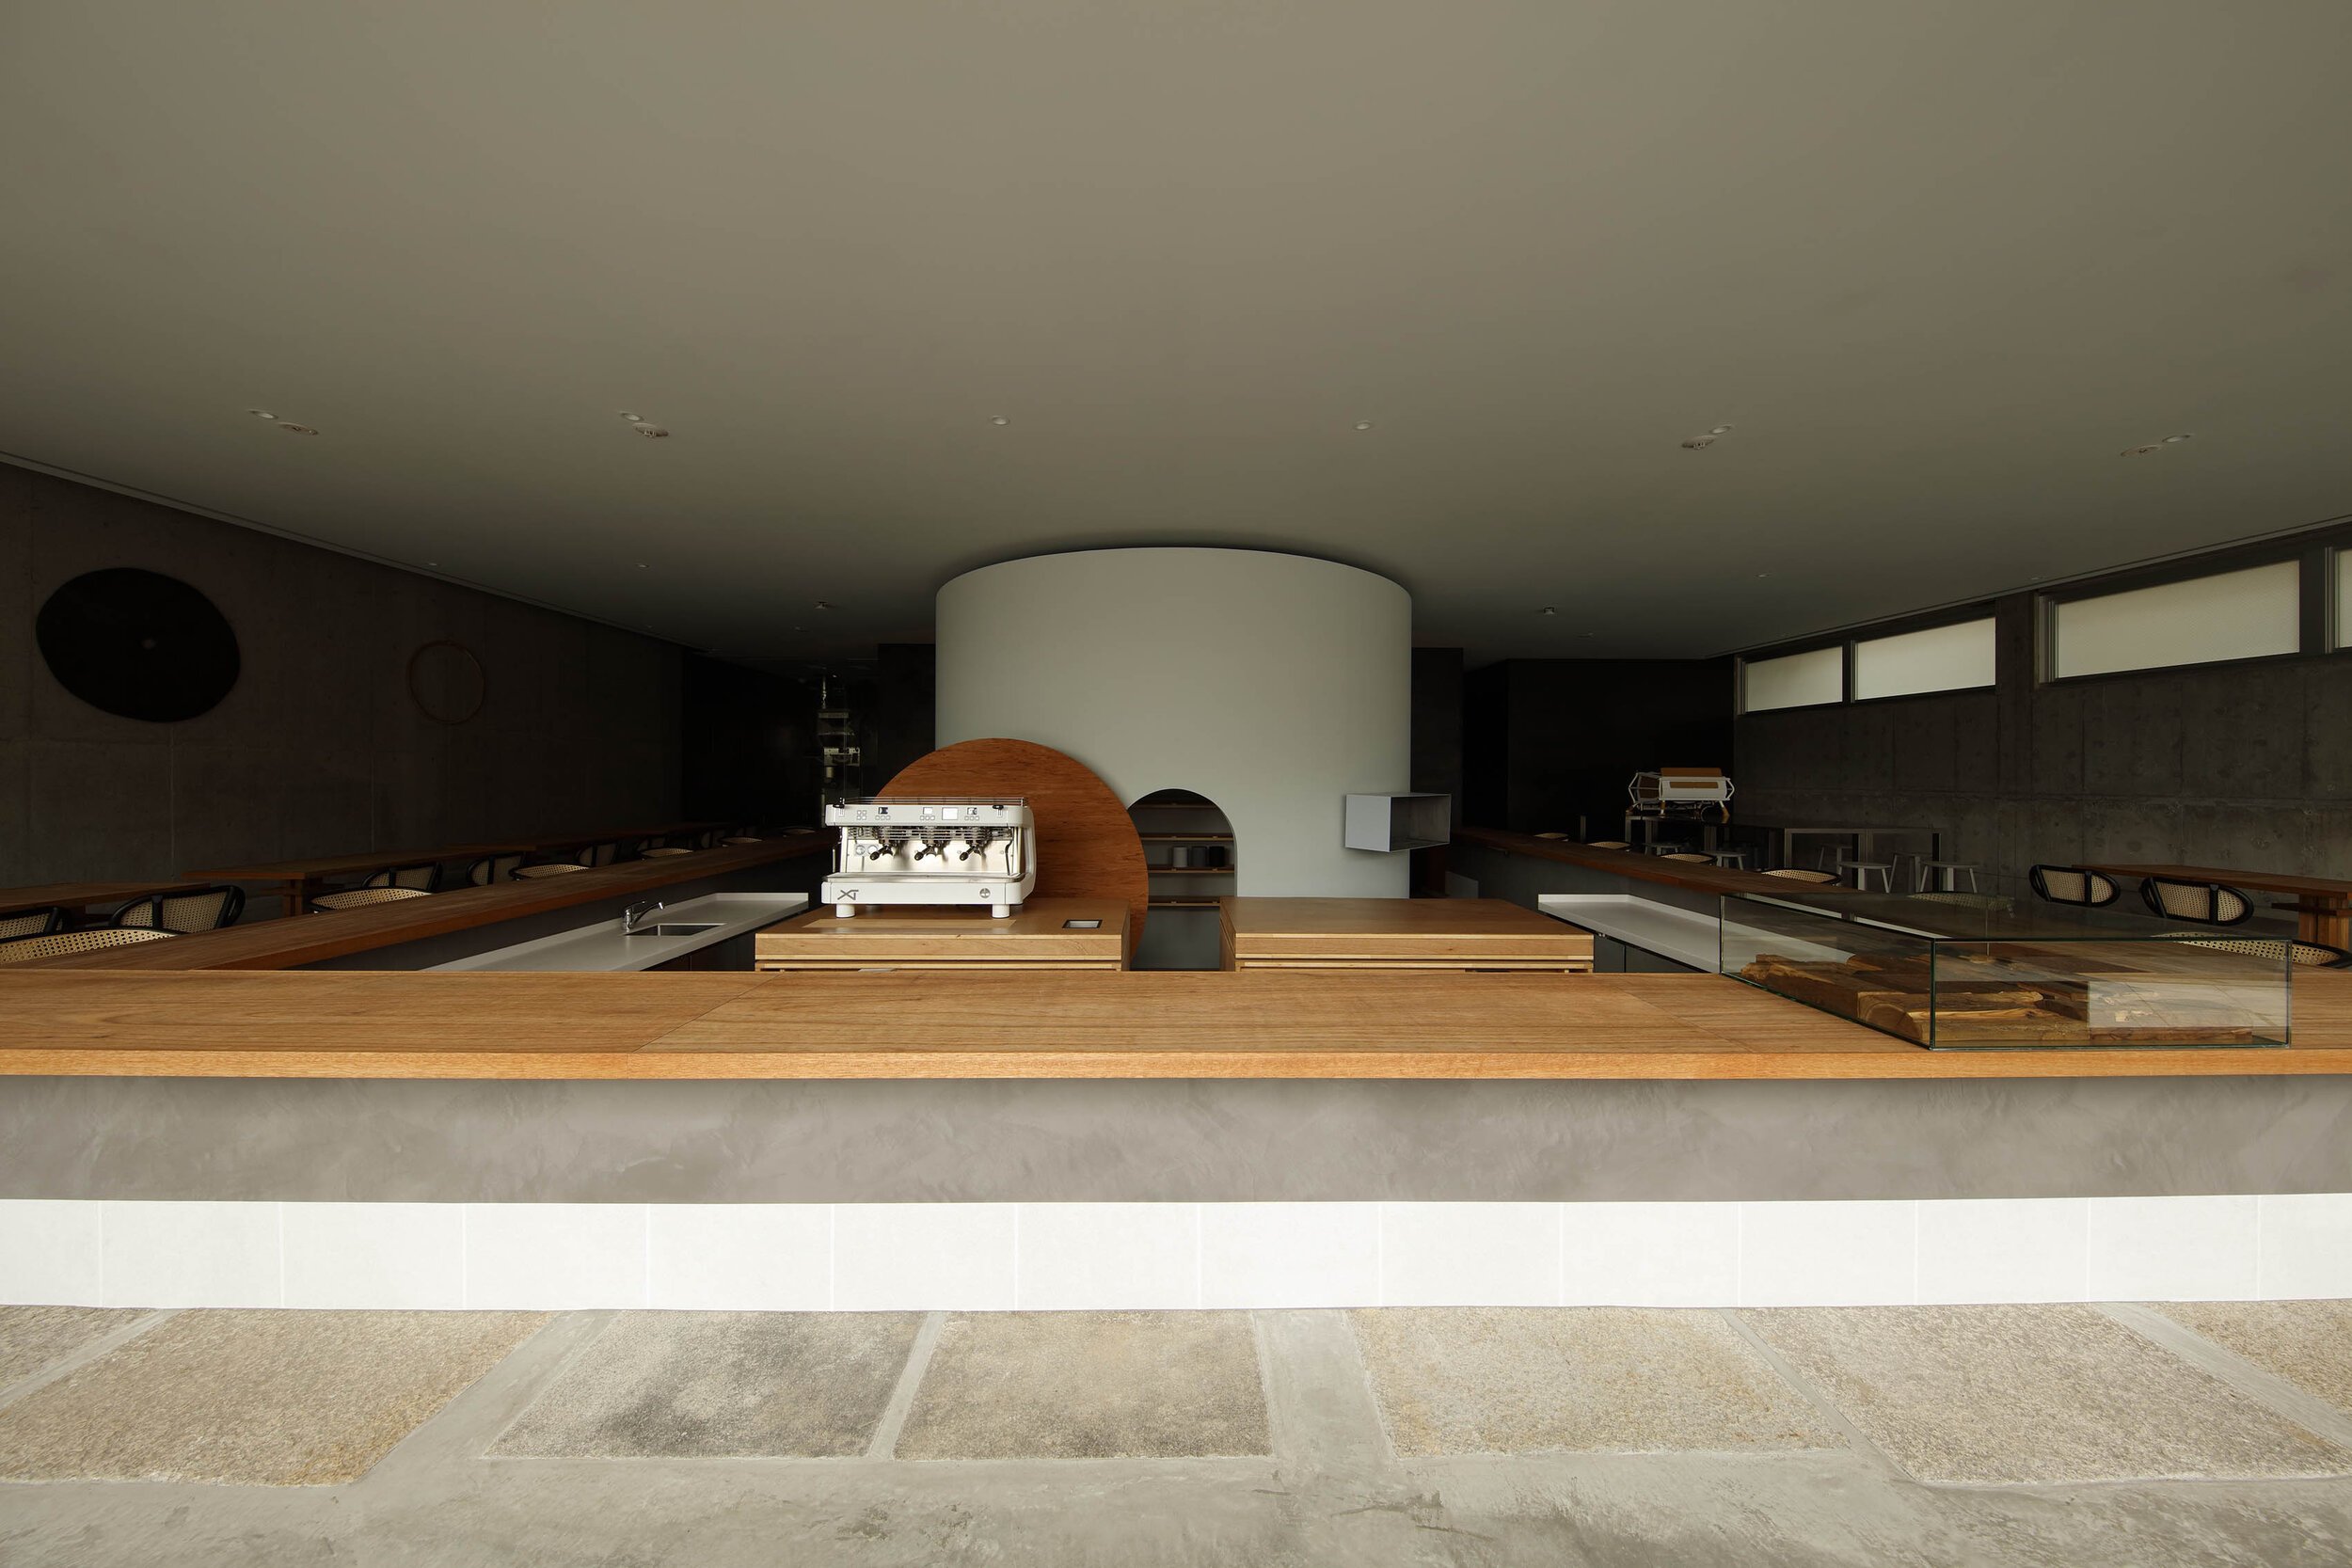  Yusuke Seki Studioの関祐介がデザインしたカフェOgawa Coffee Laboratoryのインテリアと蔵 